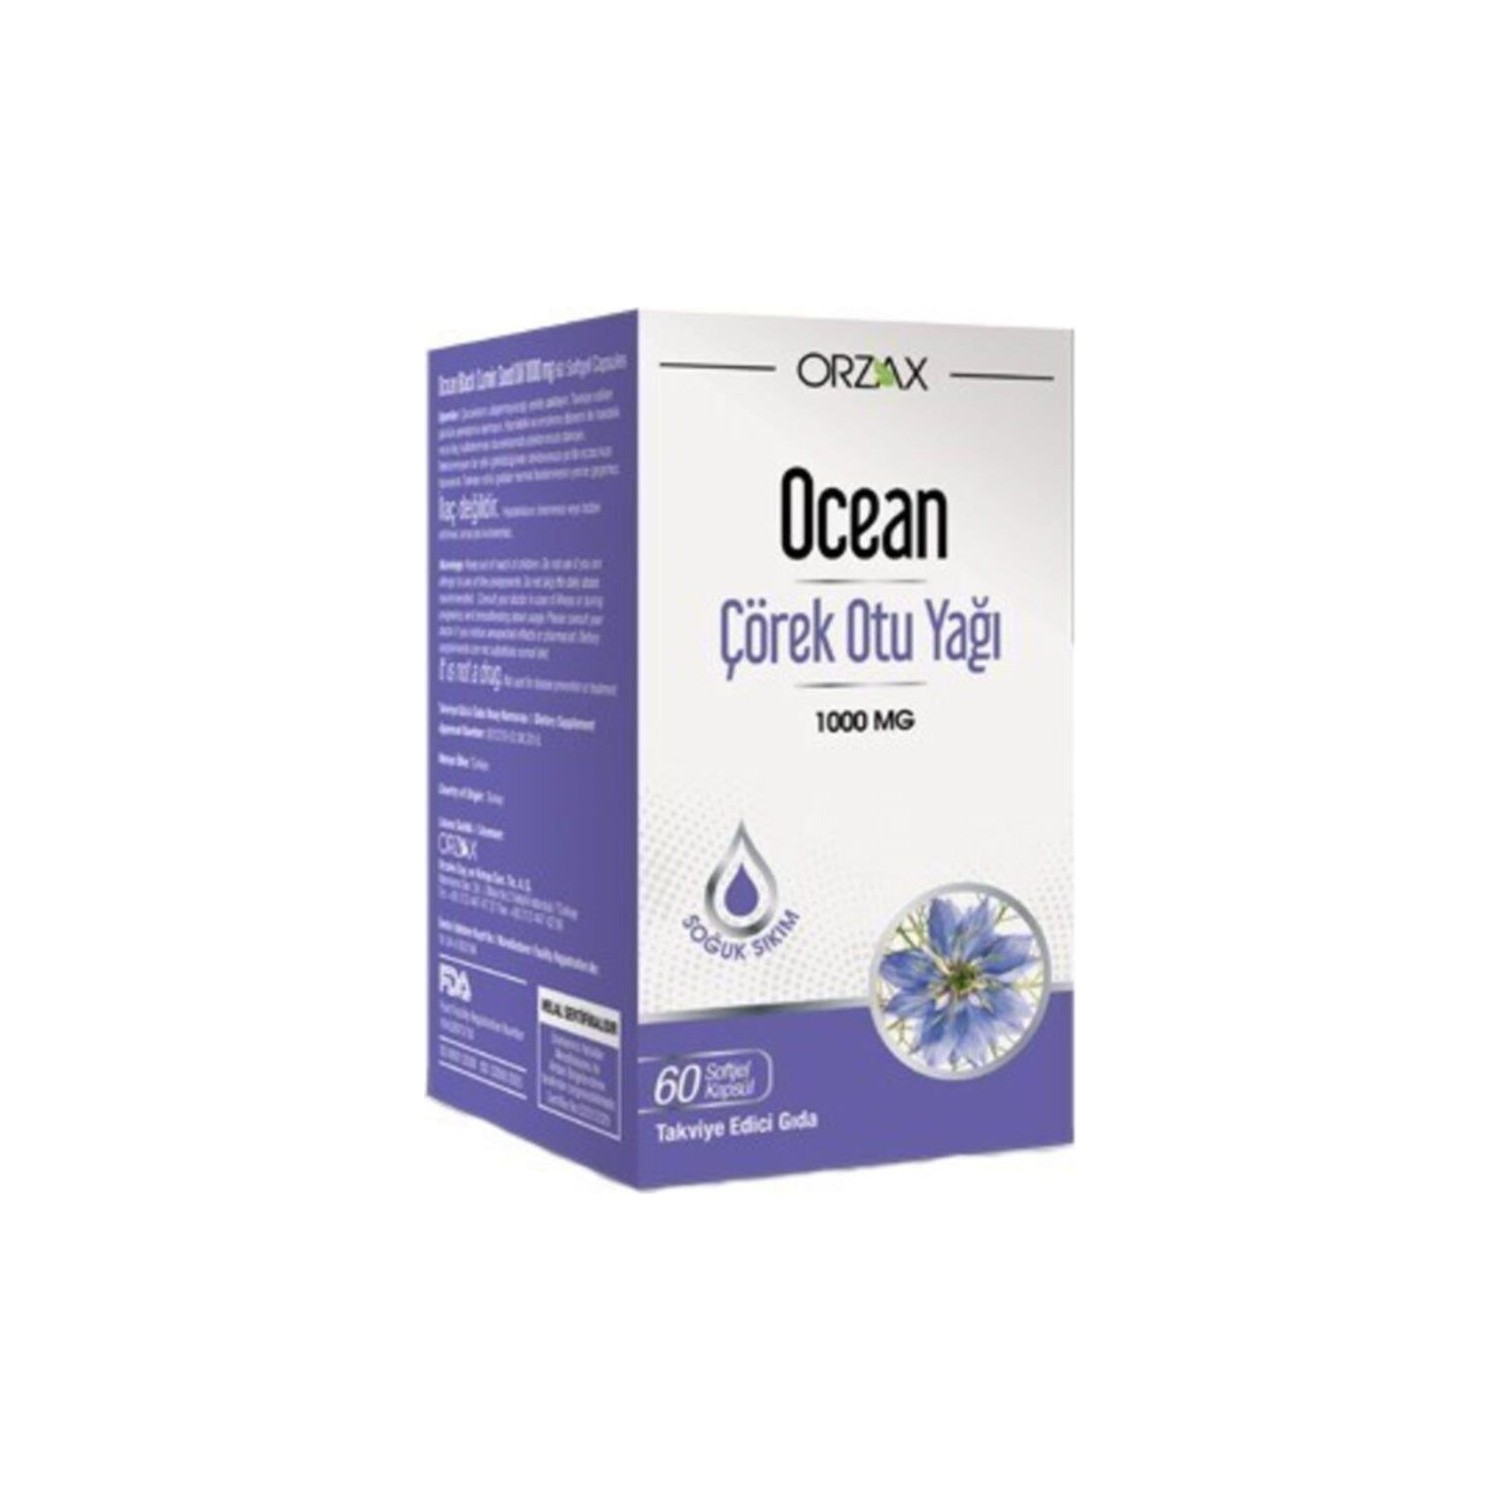 Масло черного тмина Orzax Ocean 1000 мг, 60 капсул масло черного тмина orzax ocean 1000 мг 2 упаковки